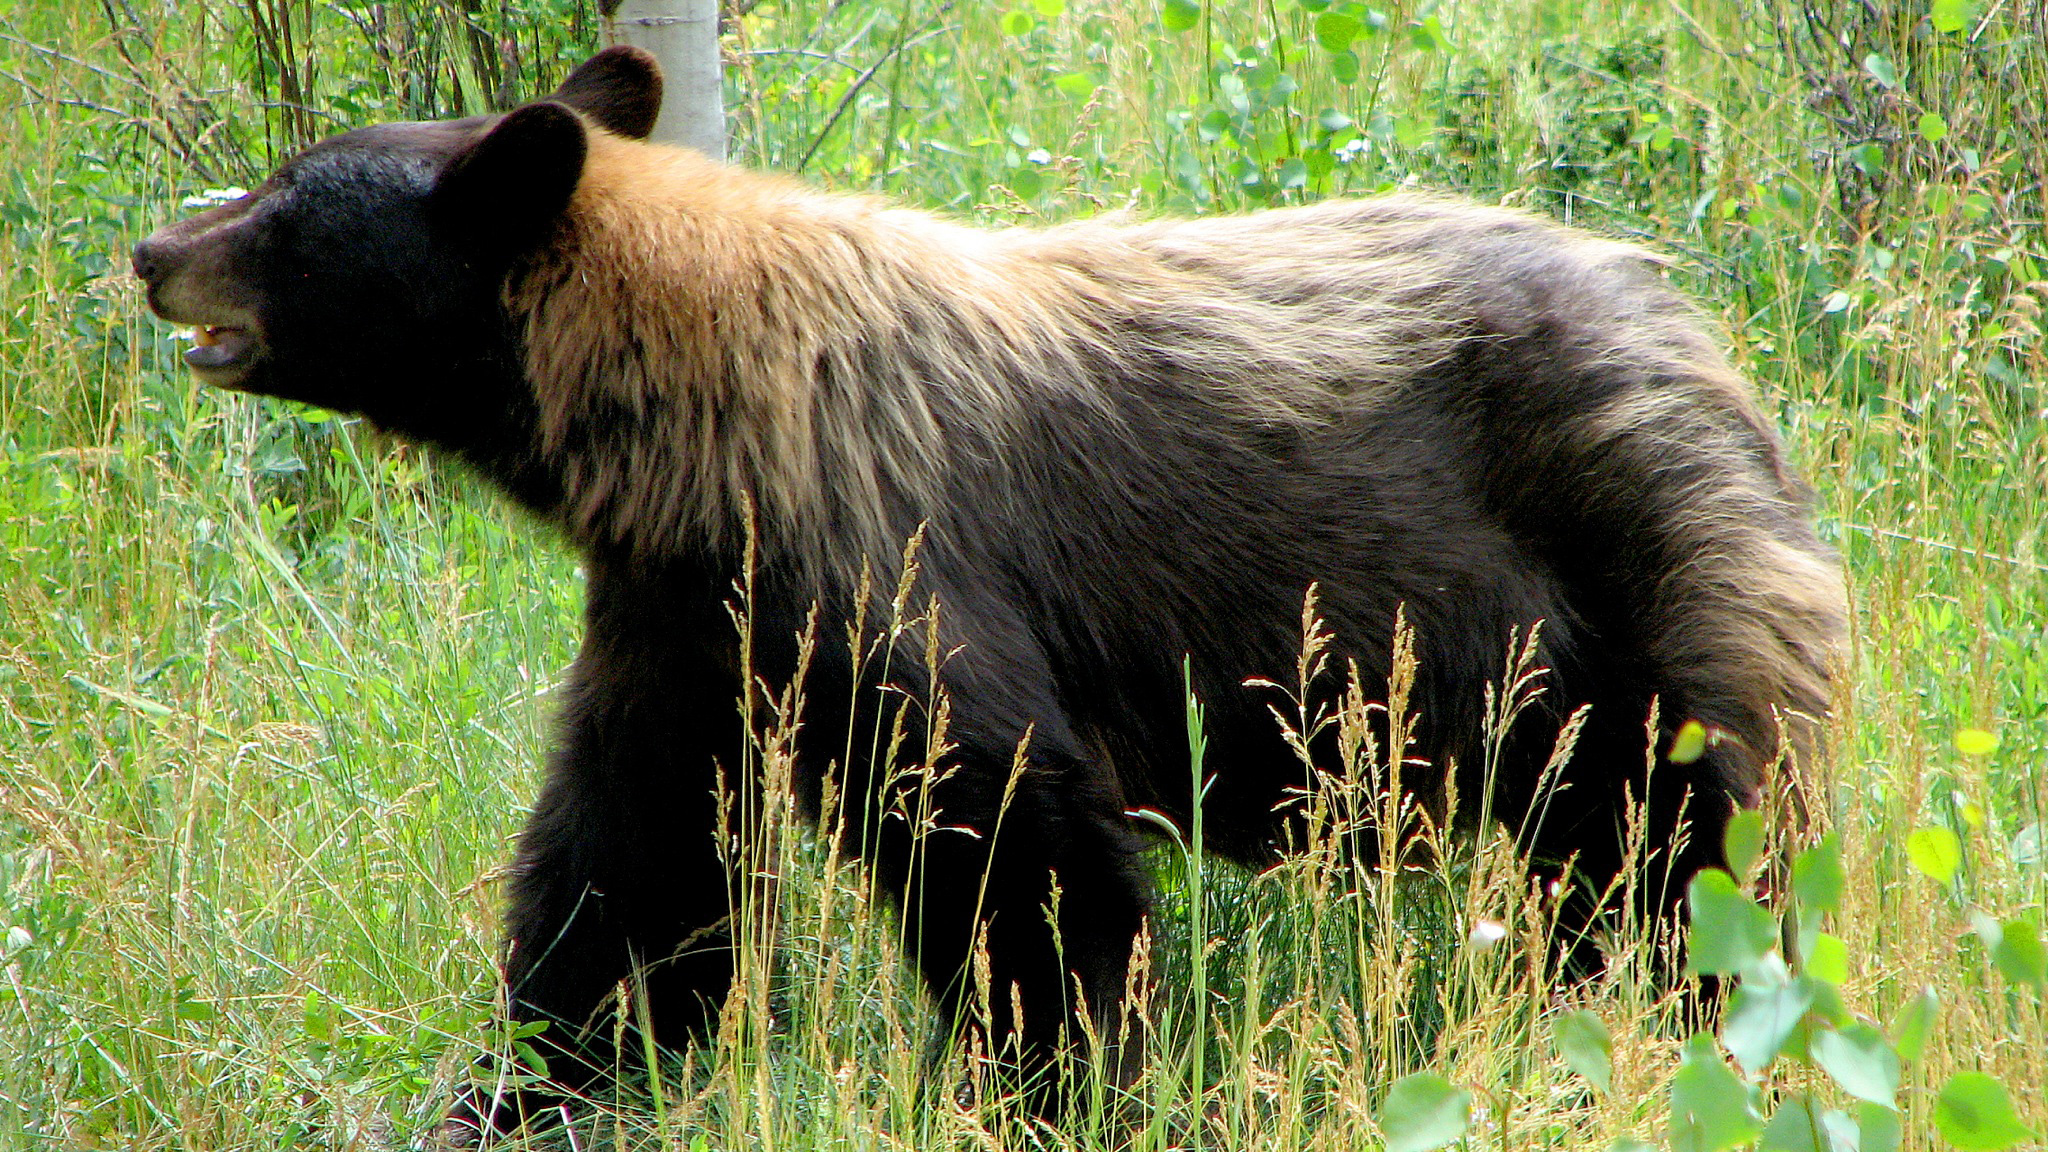 Blond bear. Photo © Debora Ratliff / Wikimedia Commons through a Creative Commons license